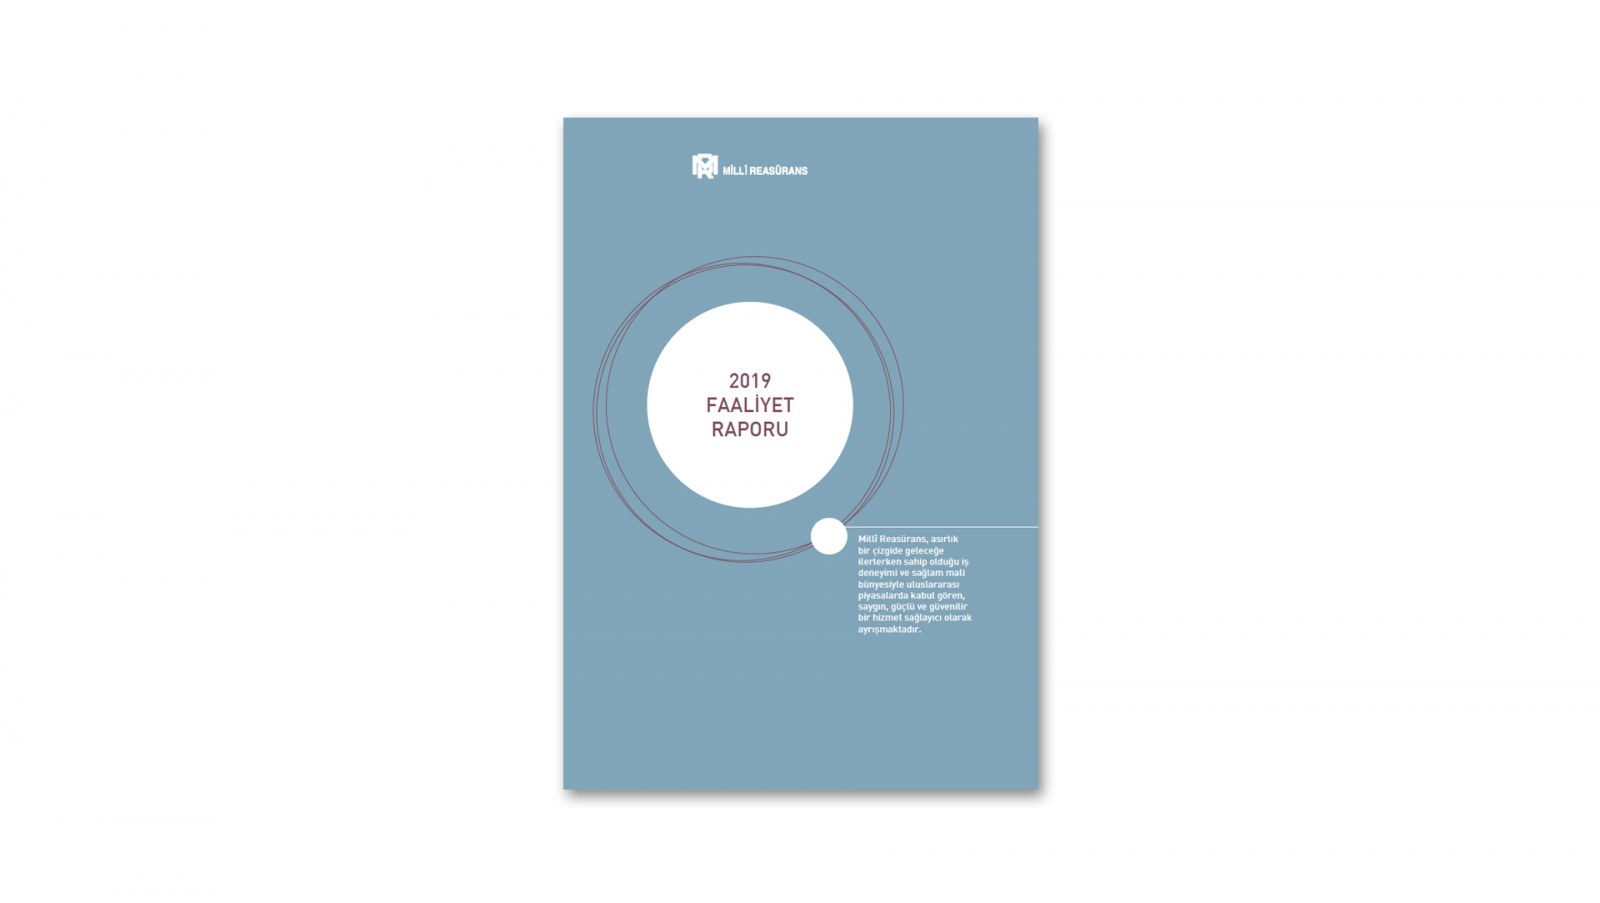 MİLLÎ REASÜRANS / 2019 Faaliyet Raporu / 2019 Annual Report